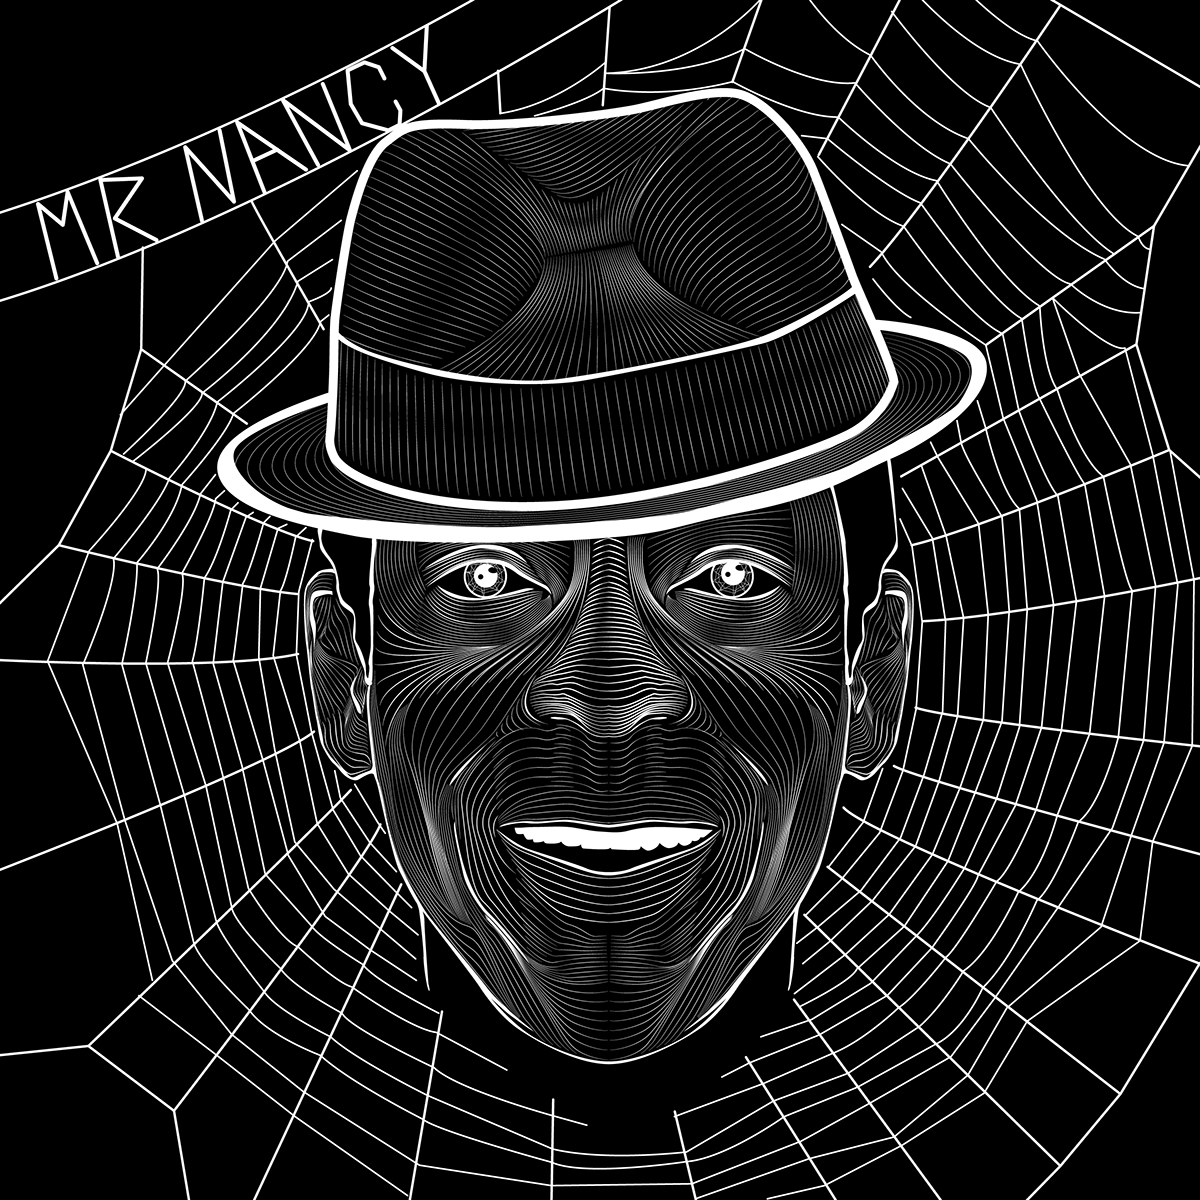 american gods Orlando Jones blend tool black and white spider web vector